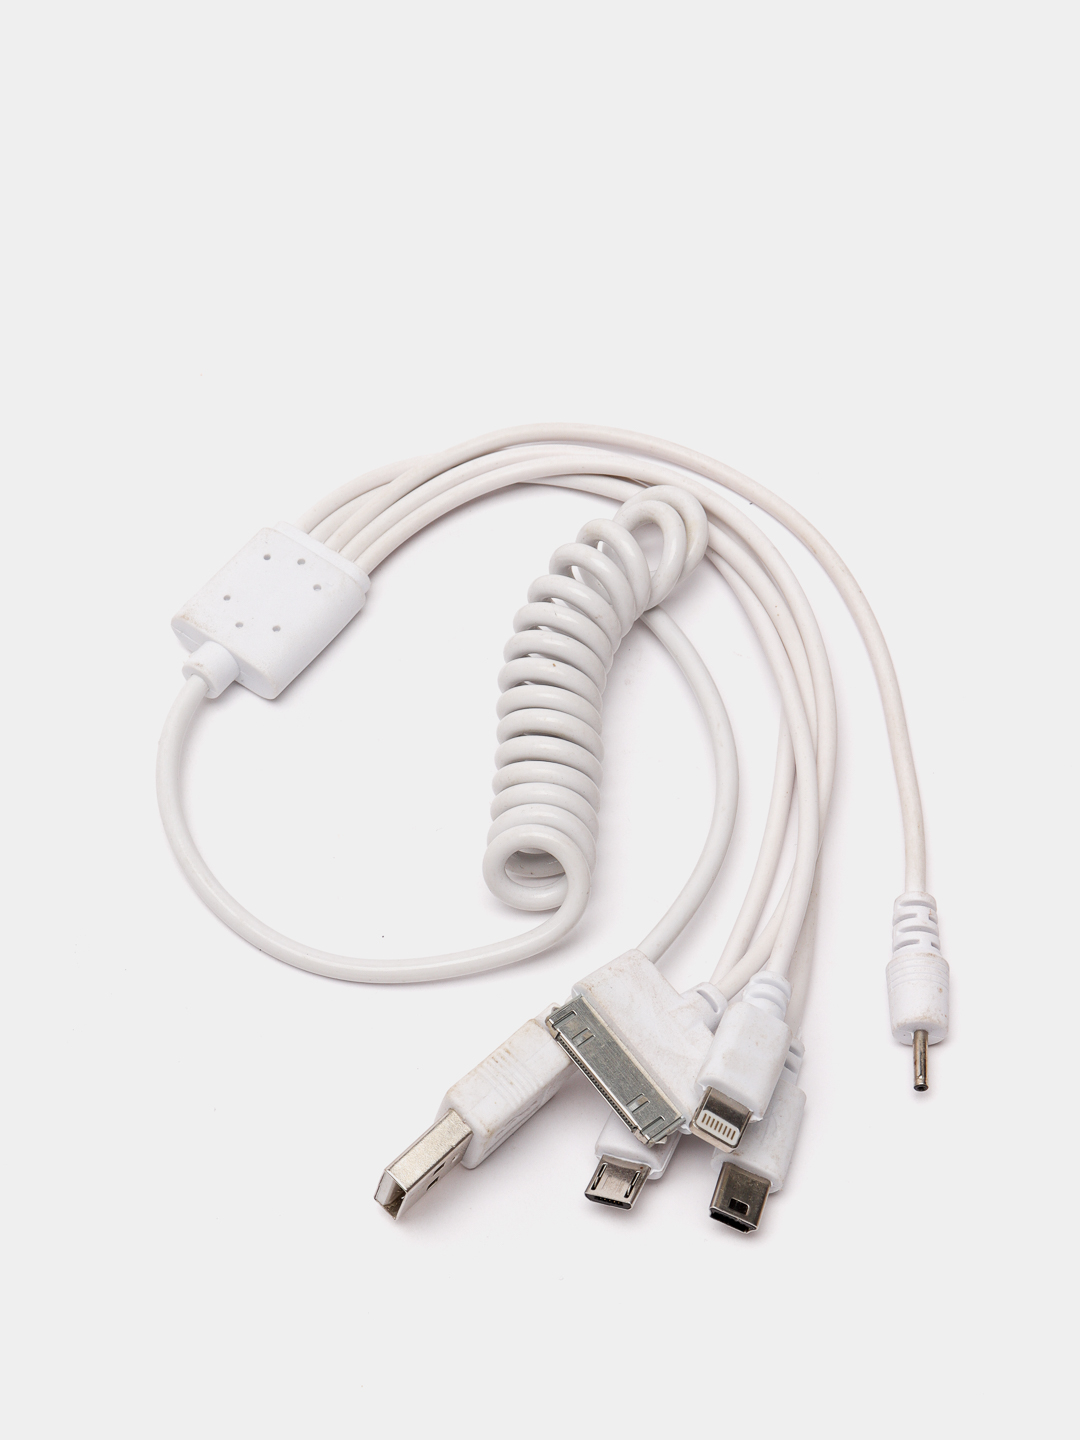 USB кабель 5 в1 (iPhone 5 / micro USB / mini USB / Samsung) белый,  техупаковка купить по цене 223 ₽ в интернет-магазине KazanExpress